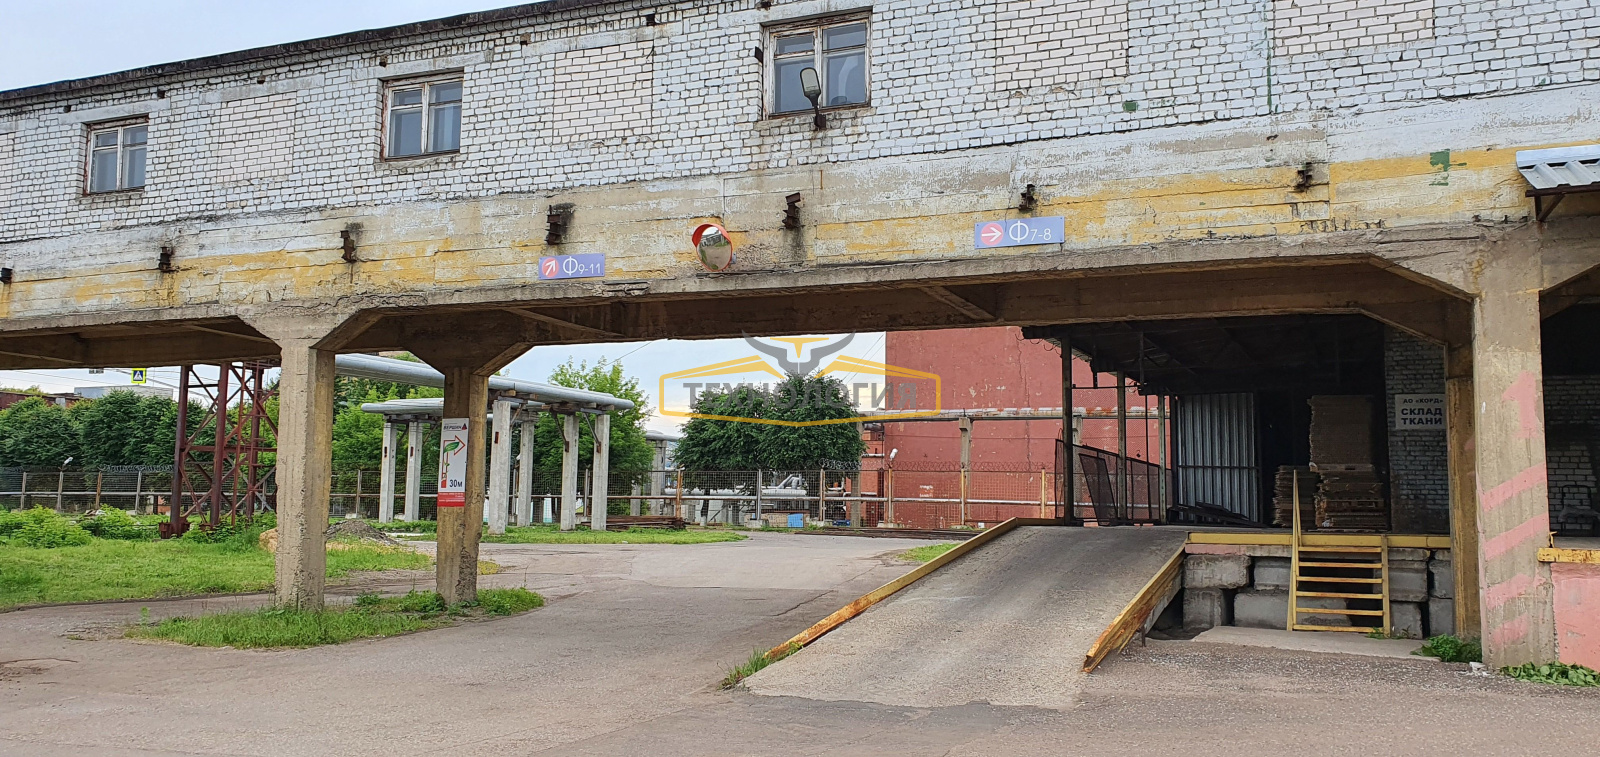 Обзор выезда со склада на территории завод ЗАО "Корд" - фото 2